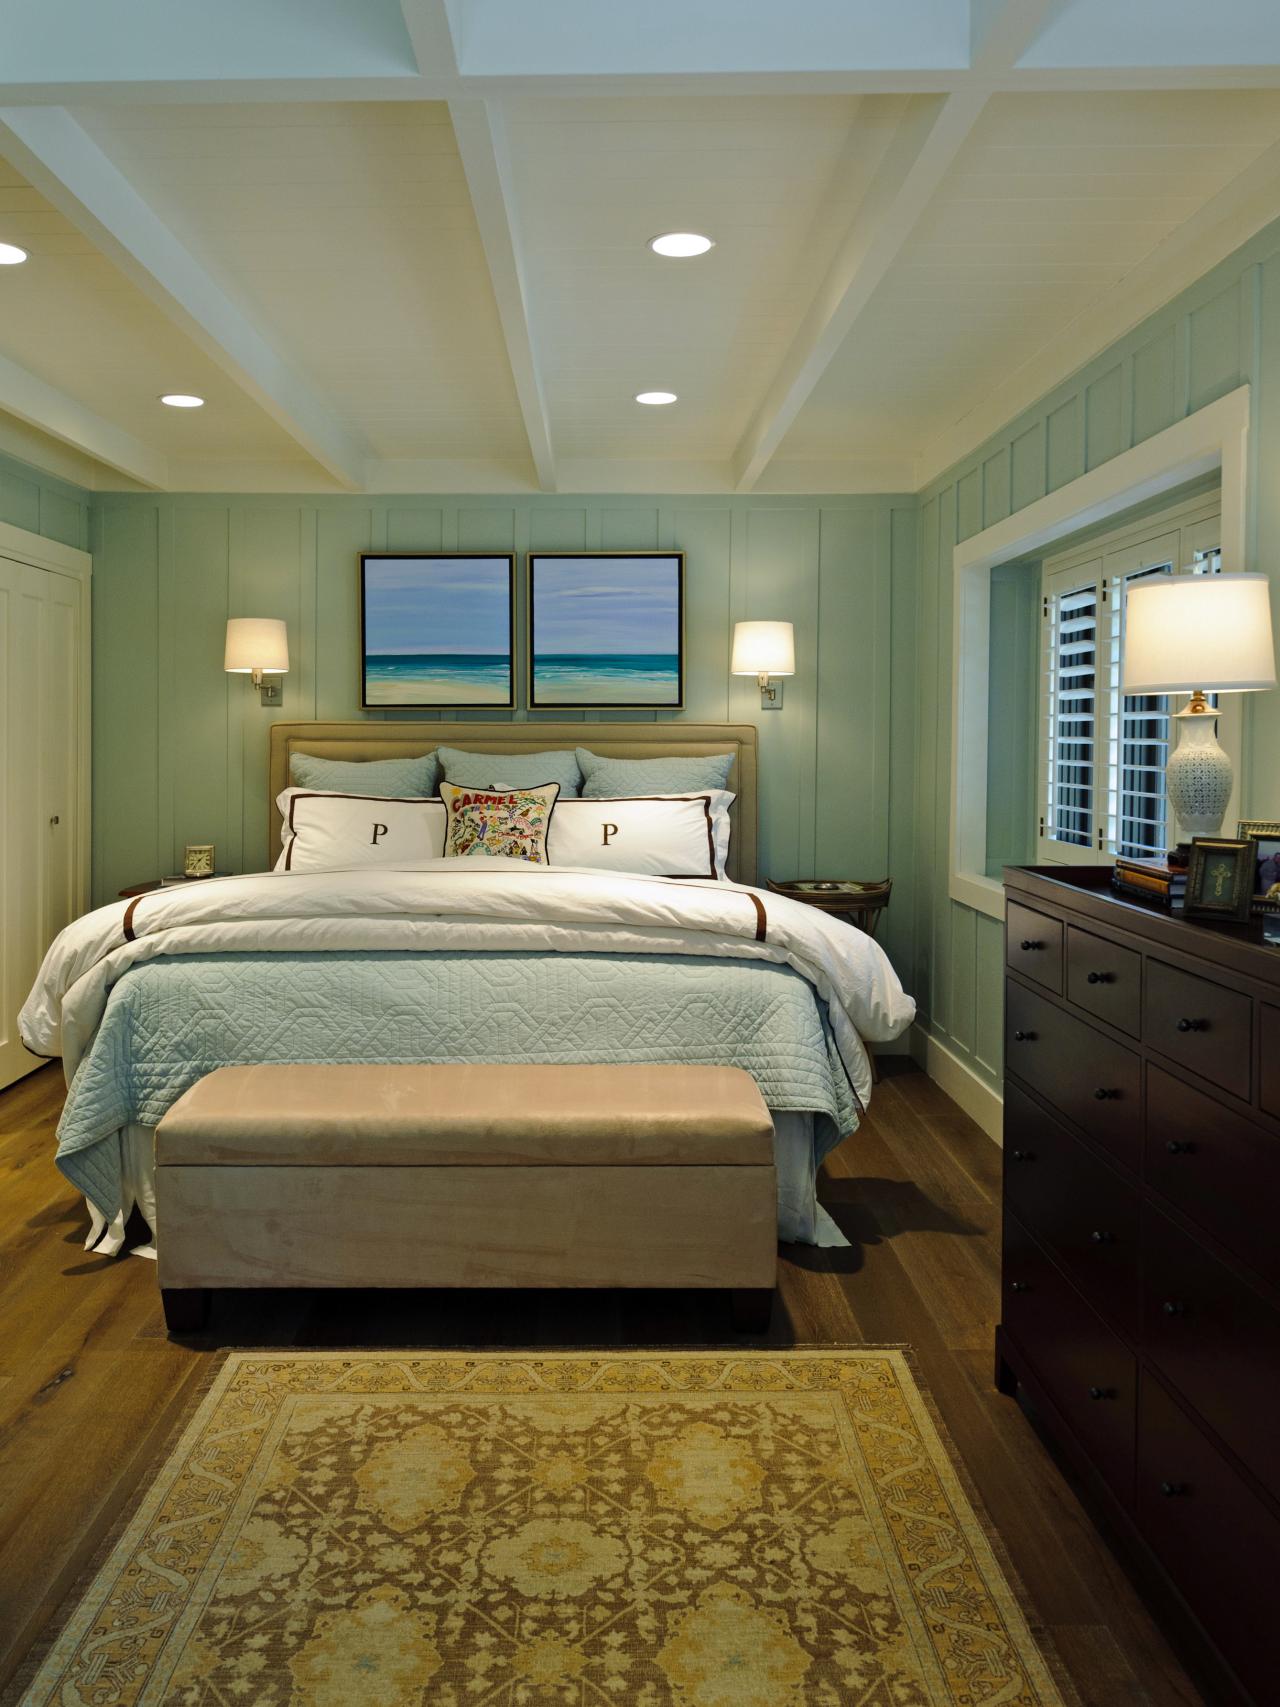 Coastal-Inspired Bedrooms | Bedrooms & Bedroom Decorating Ideas | HGTV